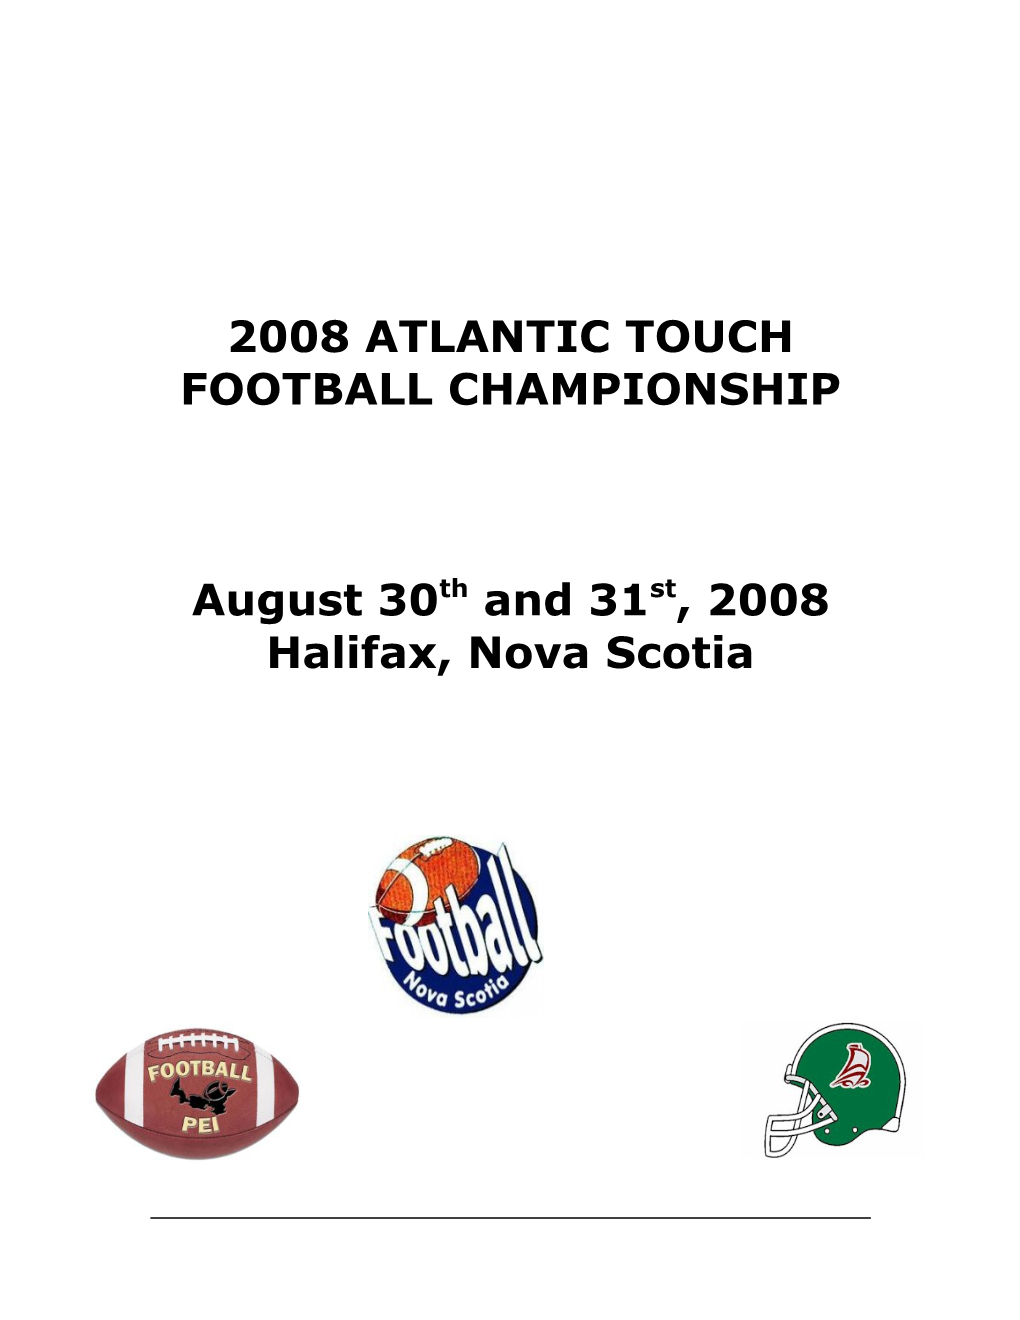 2008 Atlantic Touch Football Championship